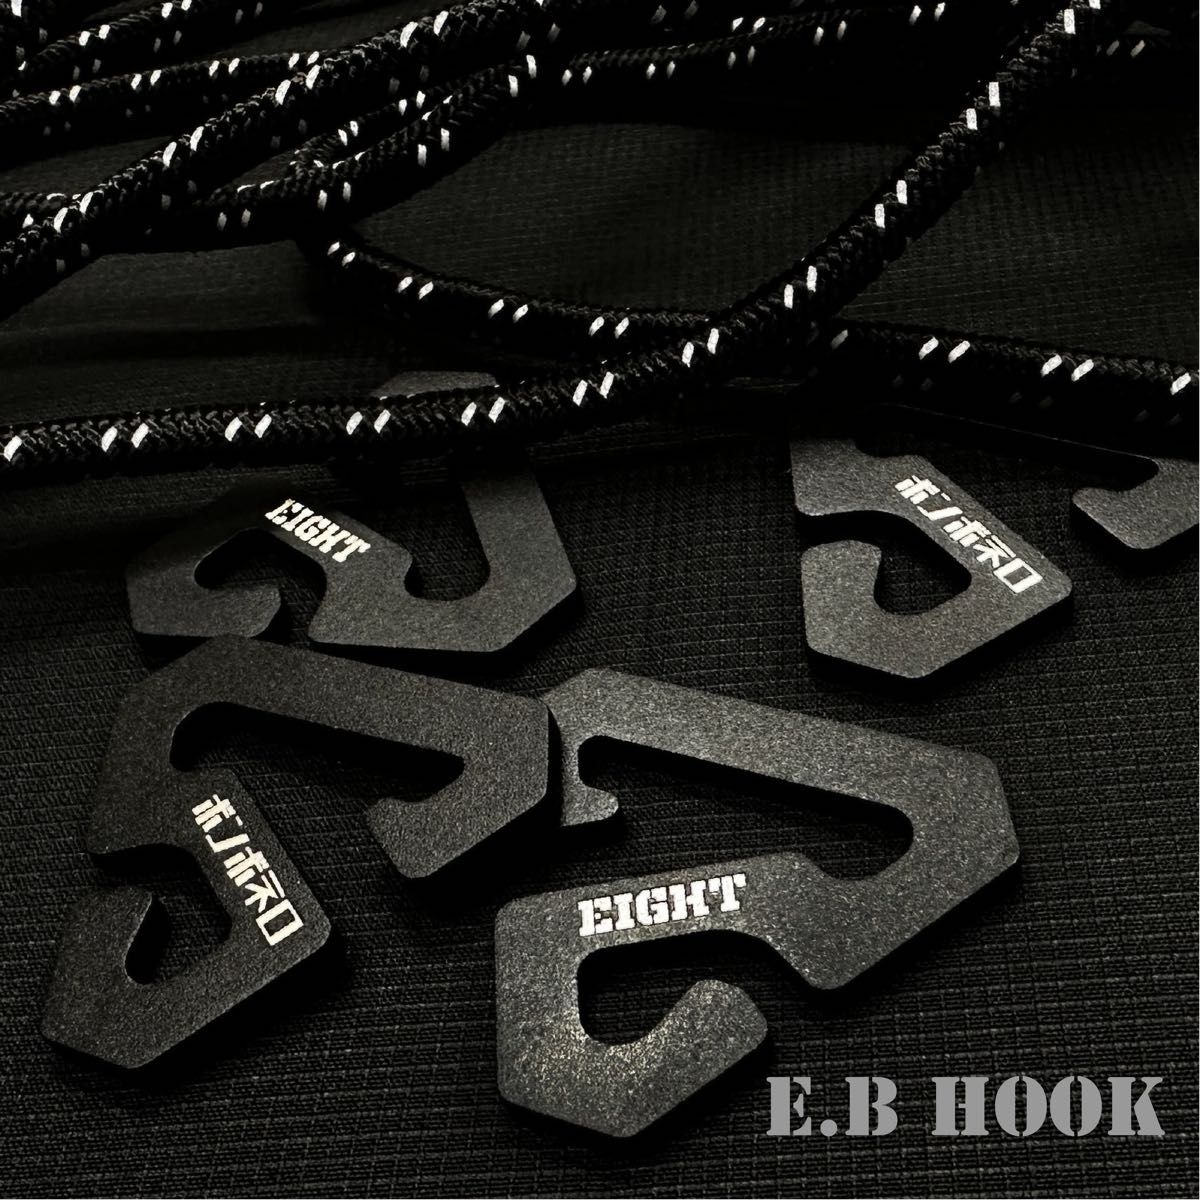 E.B Hook macone eight ボンボネロ エイト マックワン